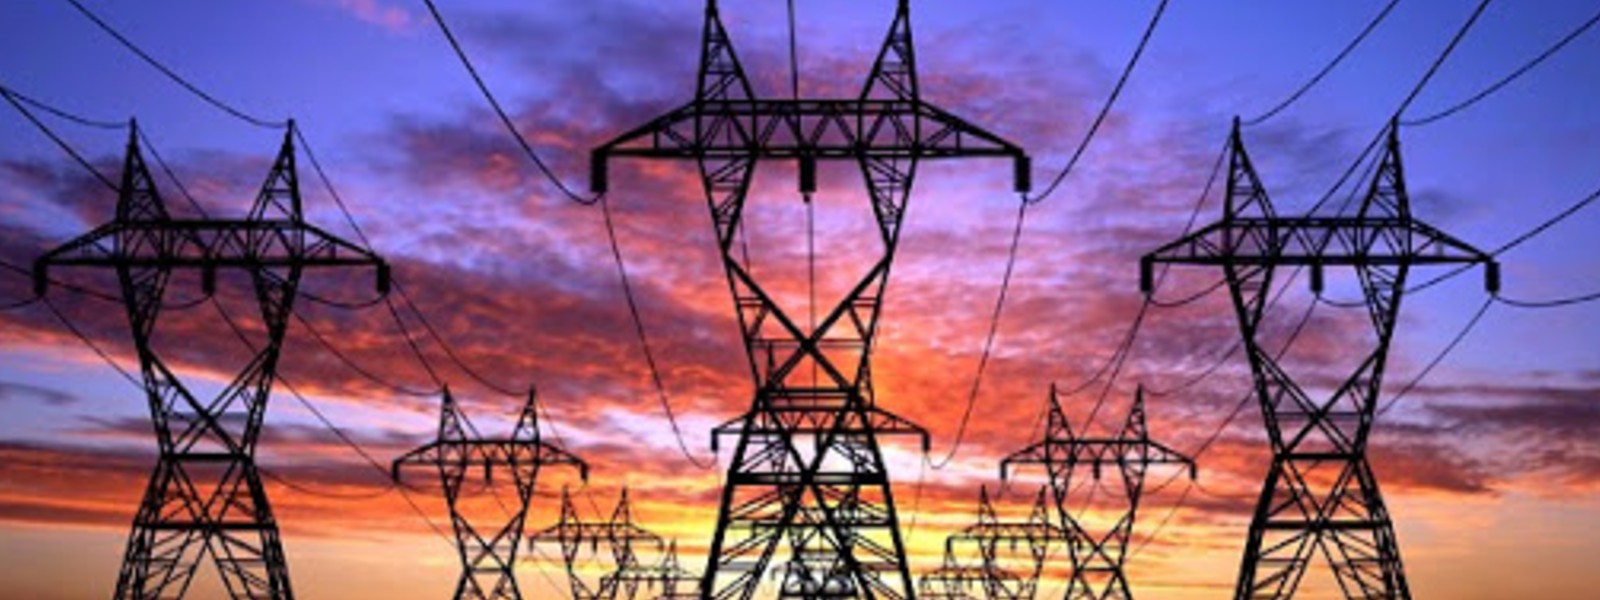 Electricity tariff hike coming soon?